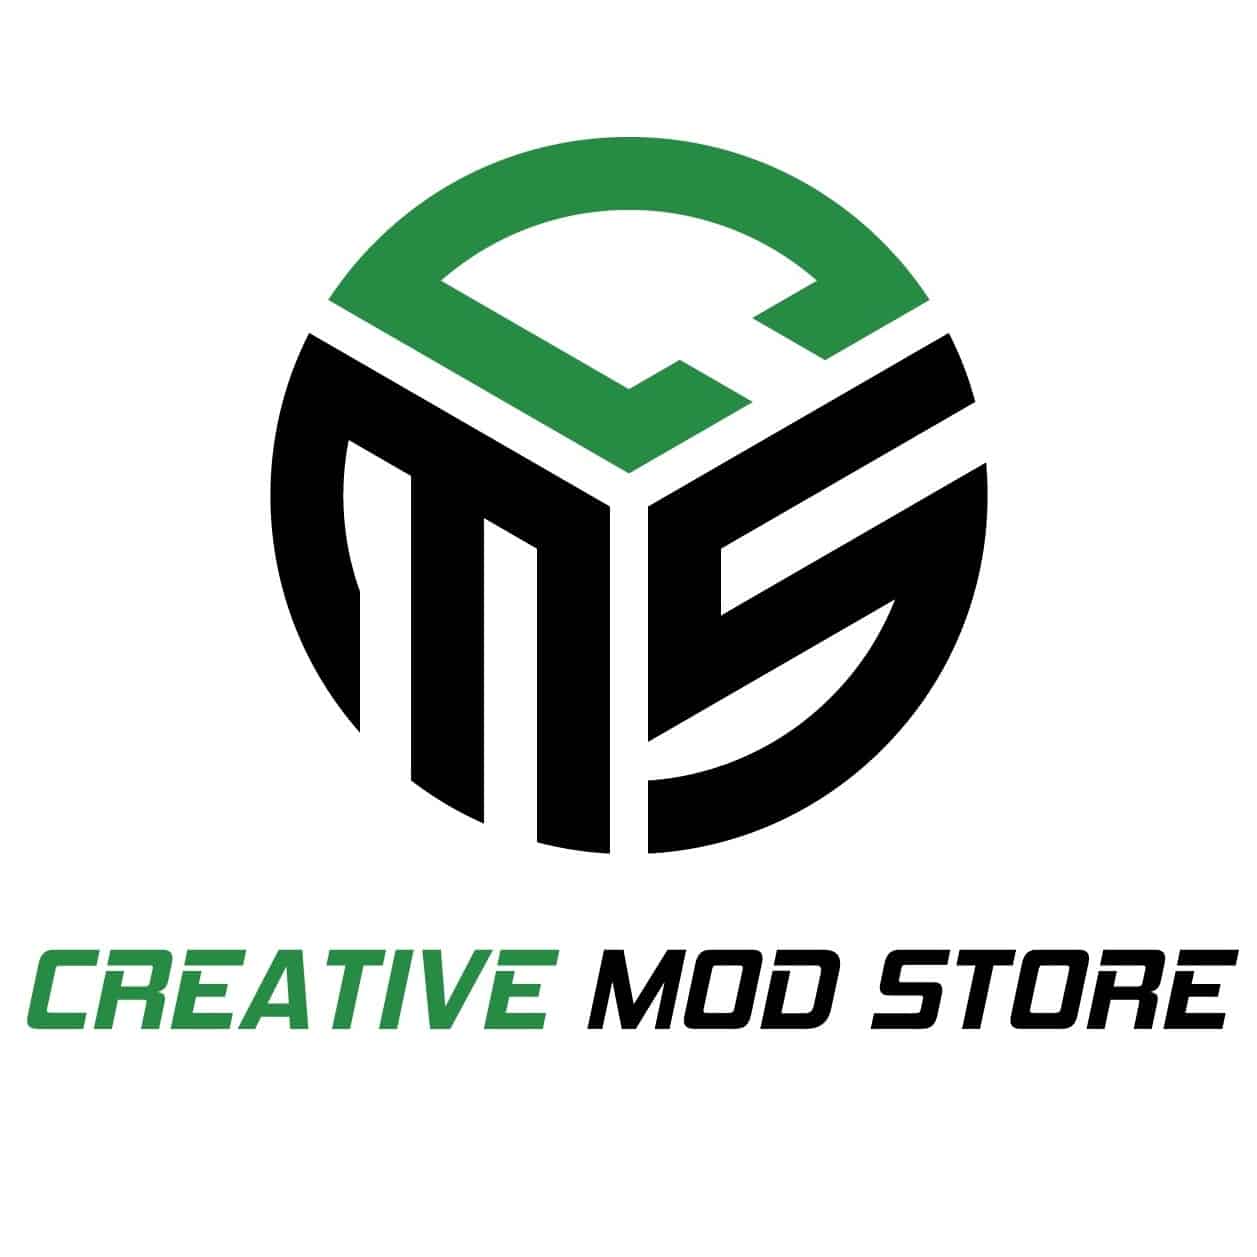 Creative Mod Store – Seiko Mod Parts